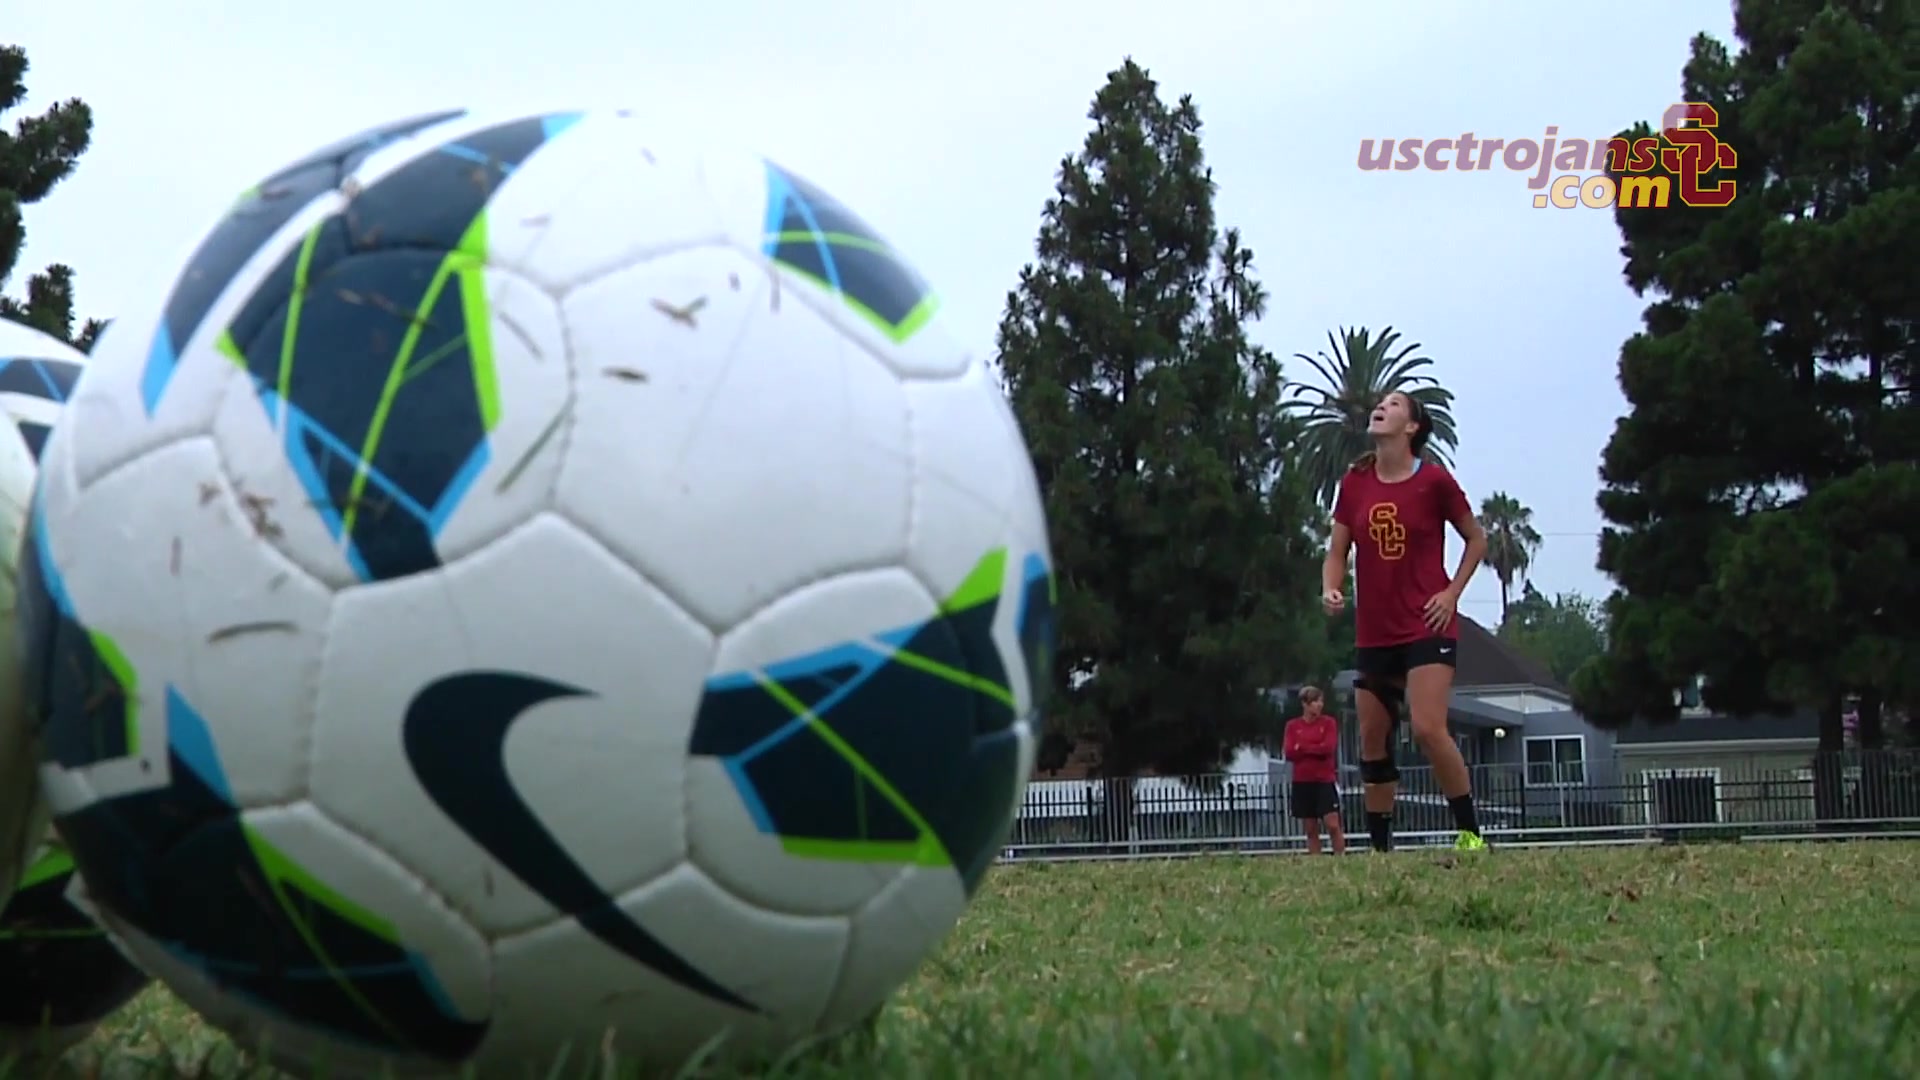 USC Women's Soccer - Training Update